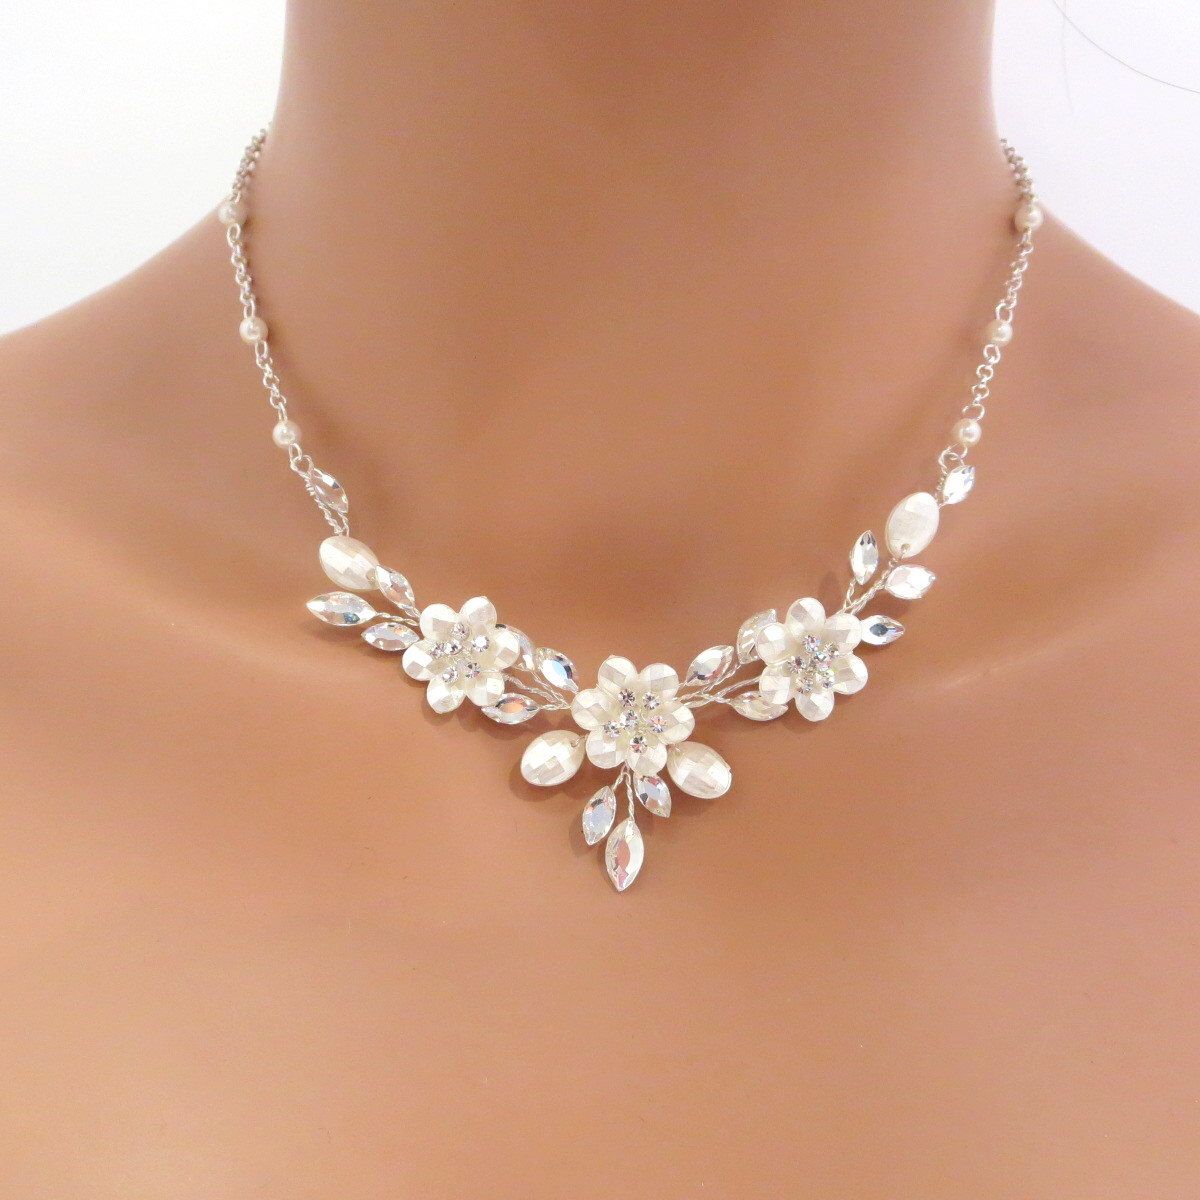 Swarovski crystal bridal necklace and earrings SET, Wedding jewelry set ...